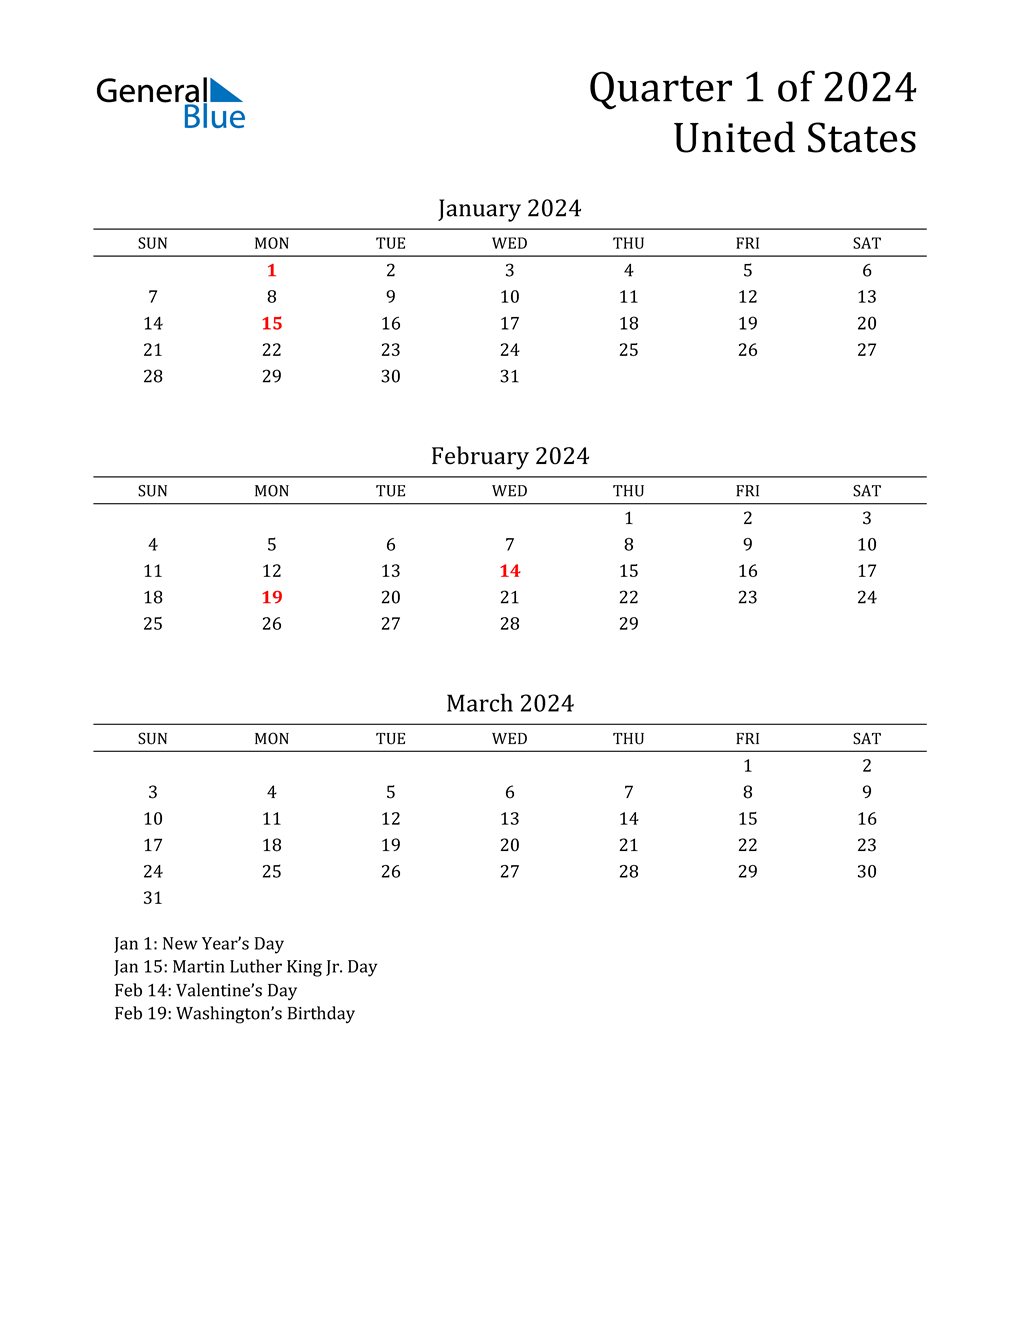 Q1 2024 Quarterly Calendar with United States Holidays